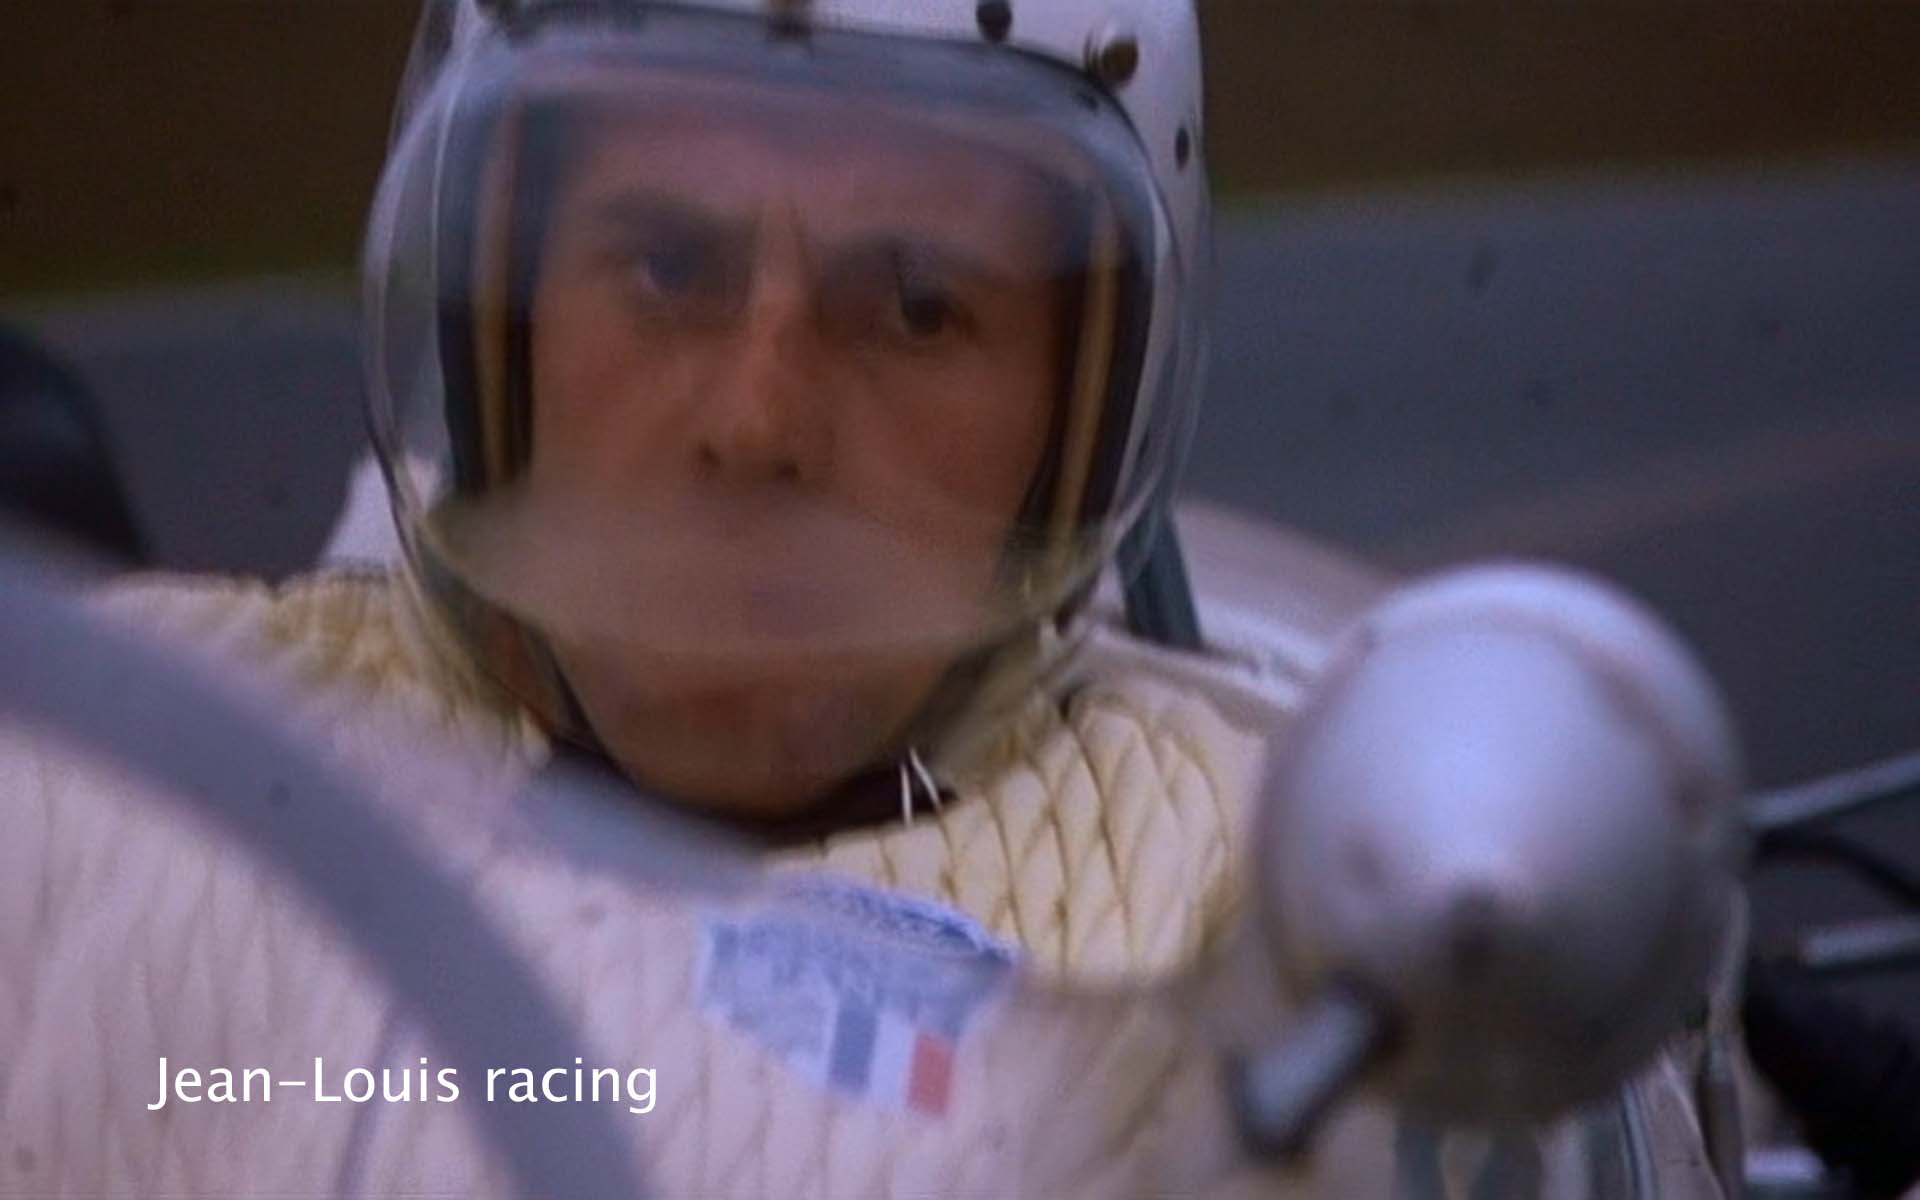 Jean-Louis racing